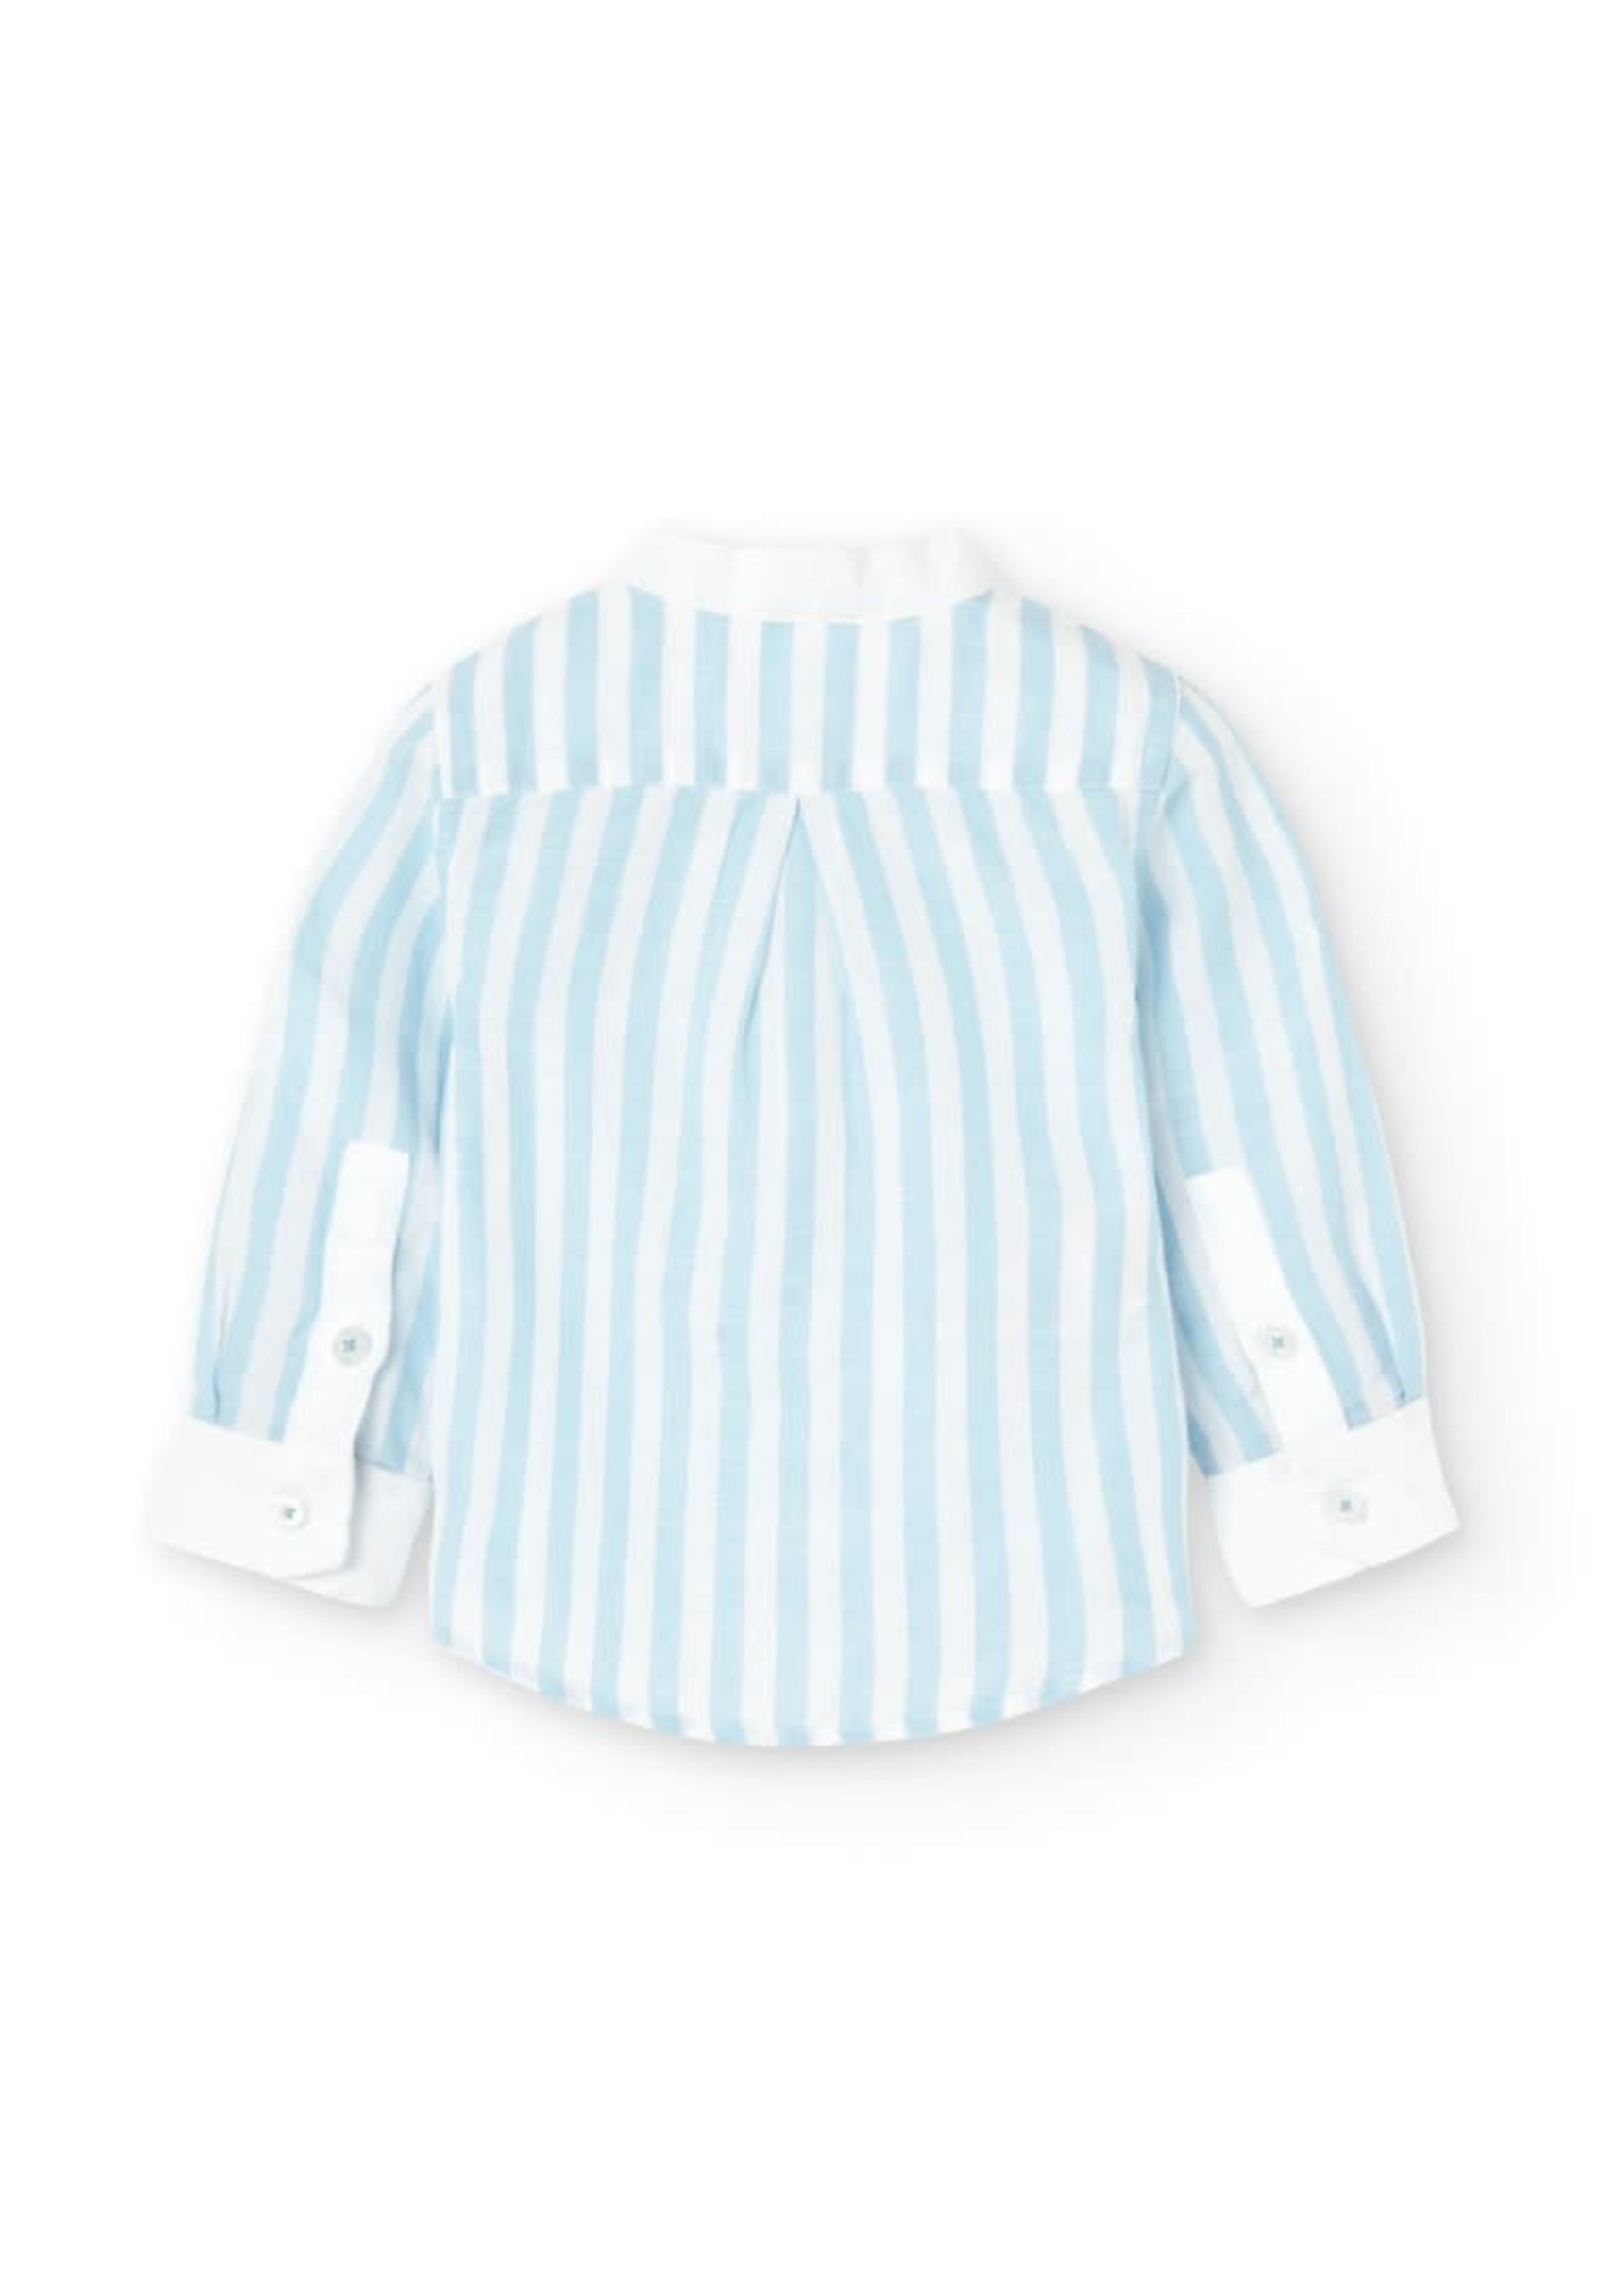 Boboli Linen shirt long sleeves striped for baby stripes 716015B